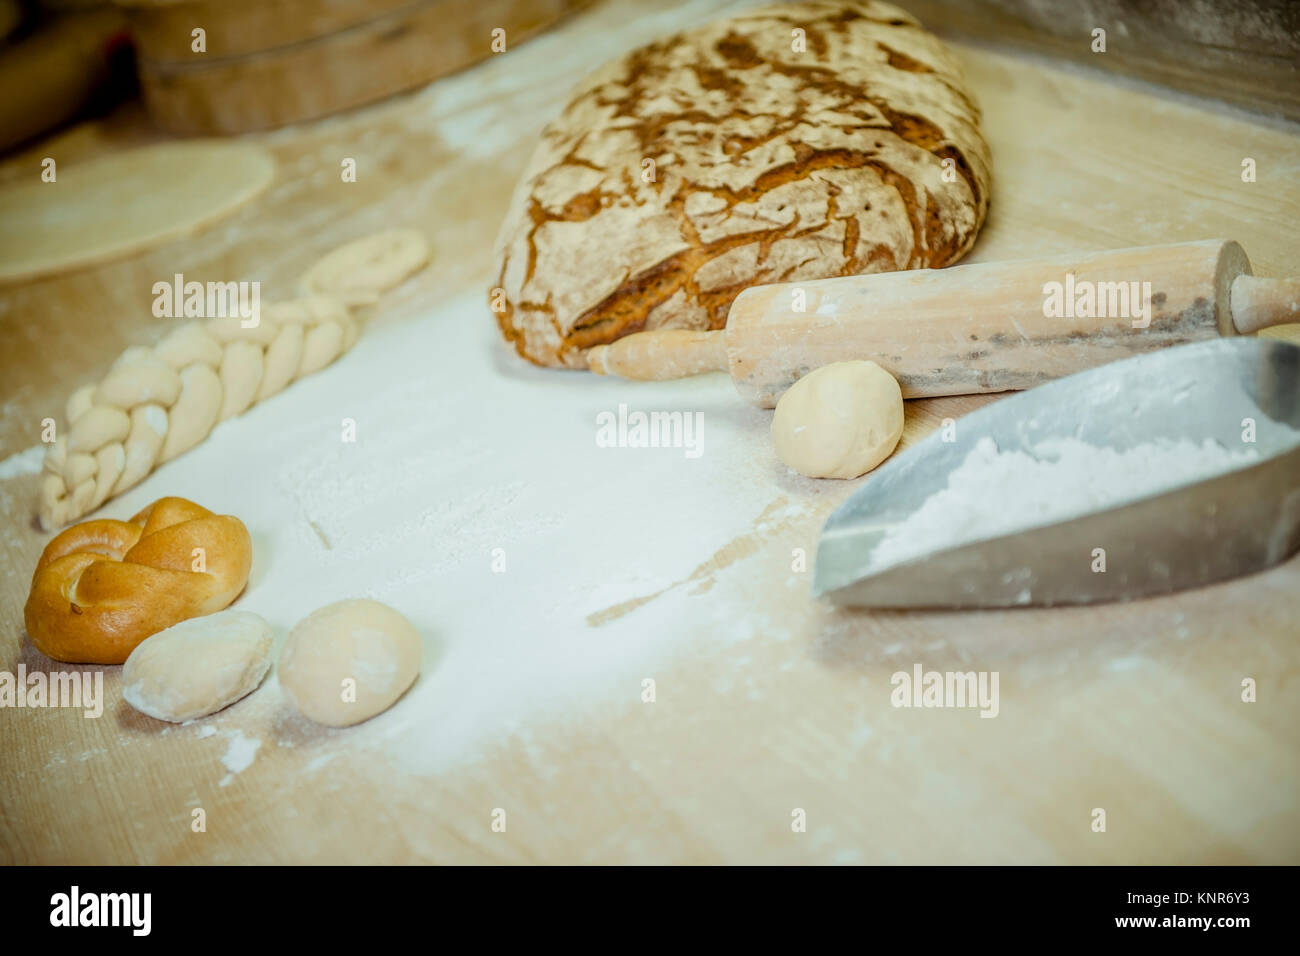 Brot backen, Zutaten - Brot backen Stockfoto